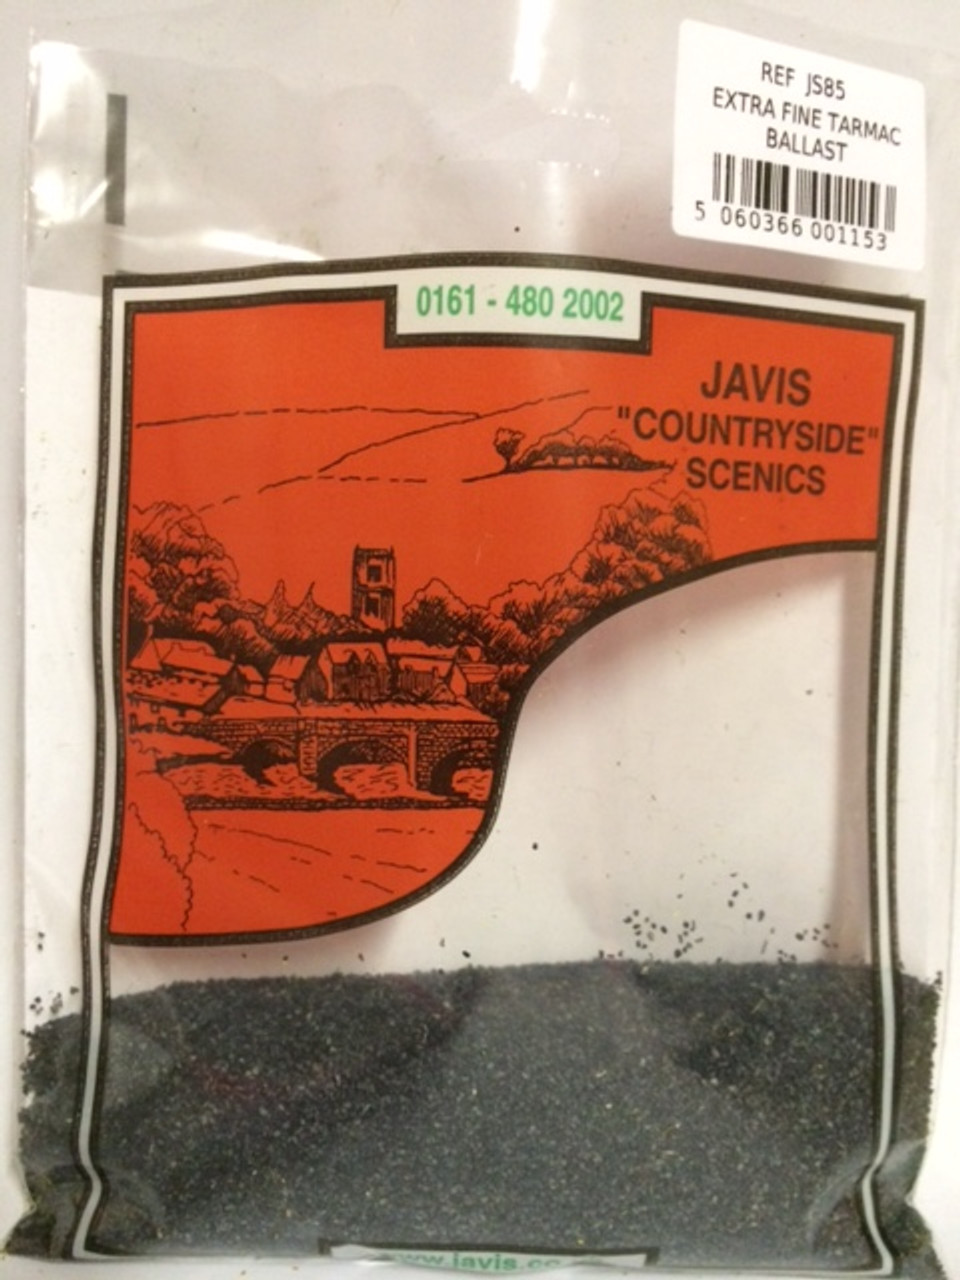 Javis JS85 Extra Fine Tarmac Ballast Scatter approx 40gms